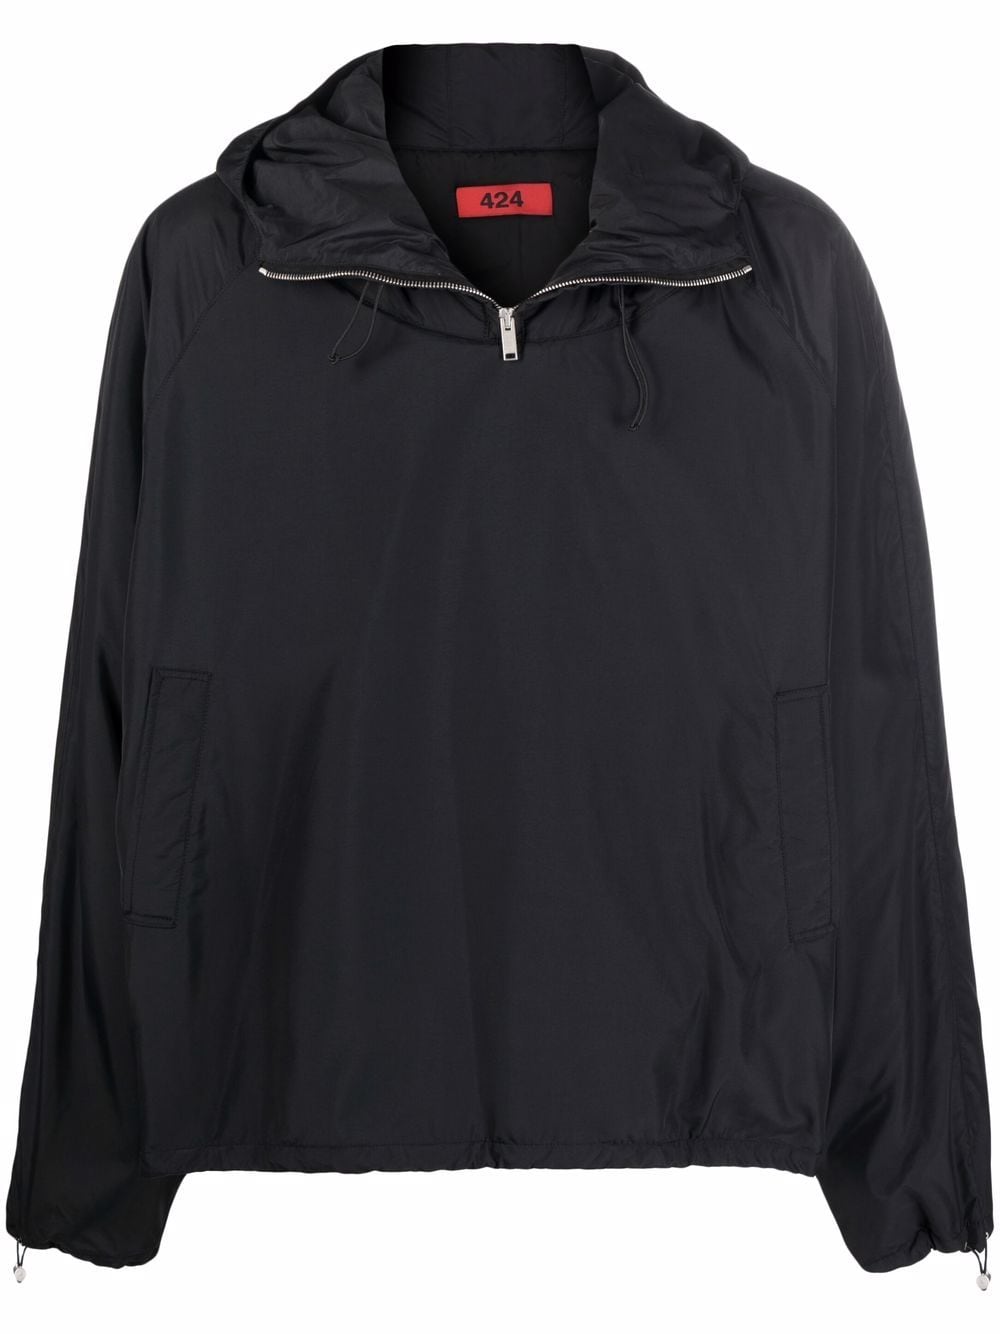 424 pullover hooded windbreaker jacket - Black von 424